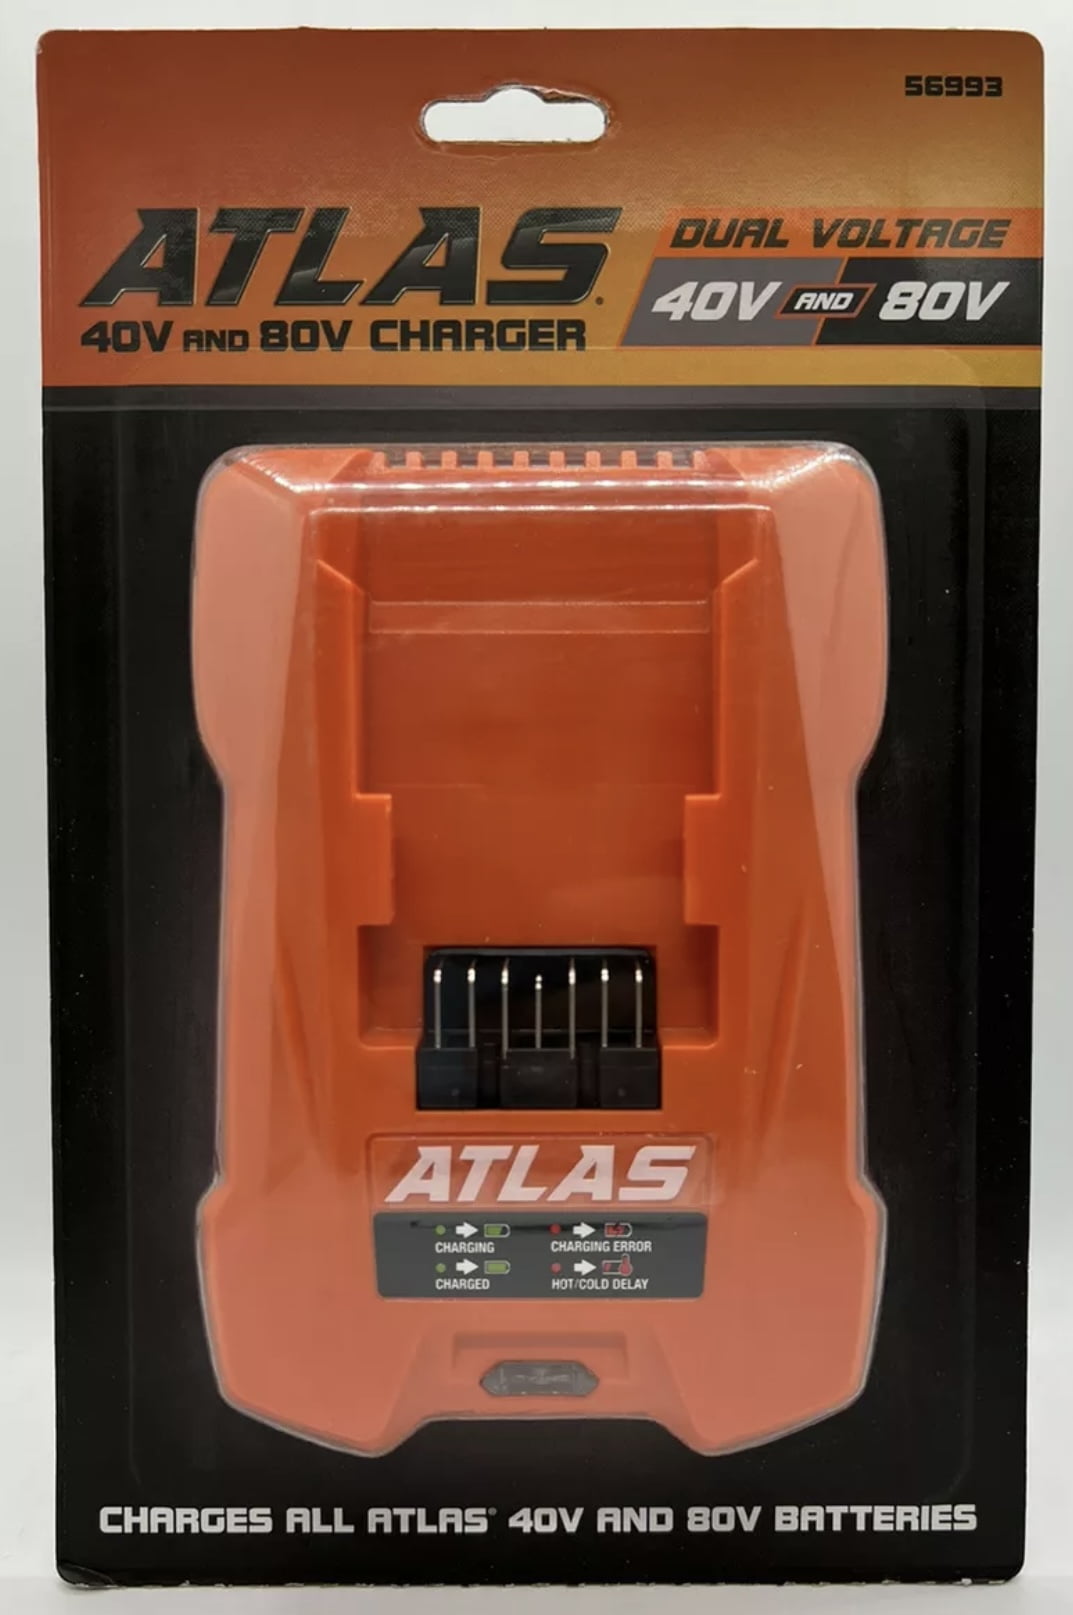 40V and 80V Dual Voltage Standard Battery Charger